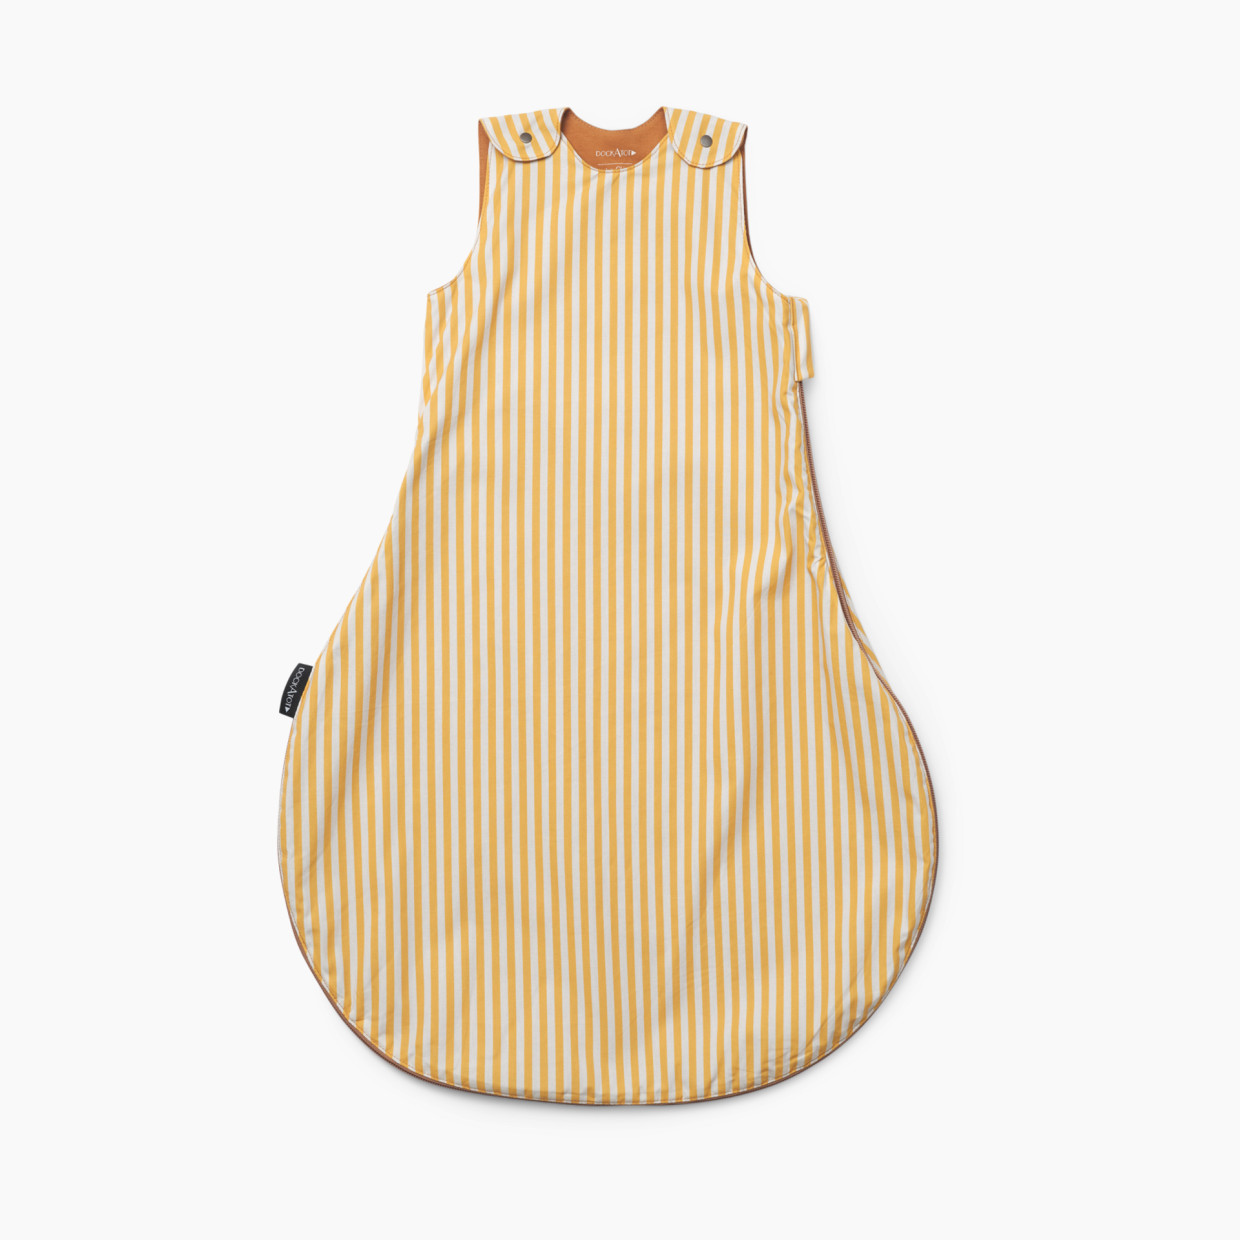 DockATot Sleep Bag TOG 1.0 - Golden Stripe, 0-6 M.